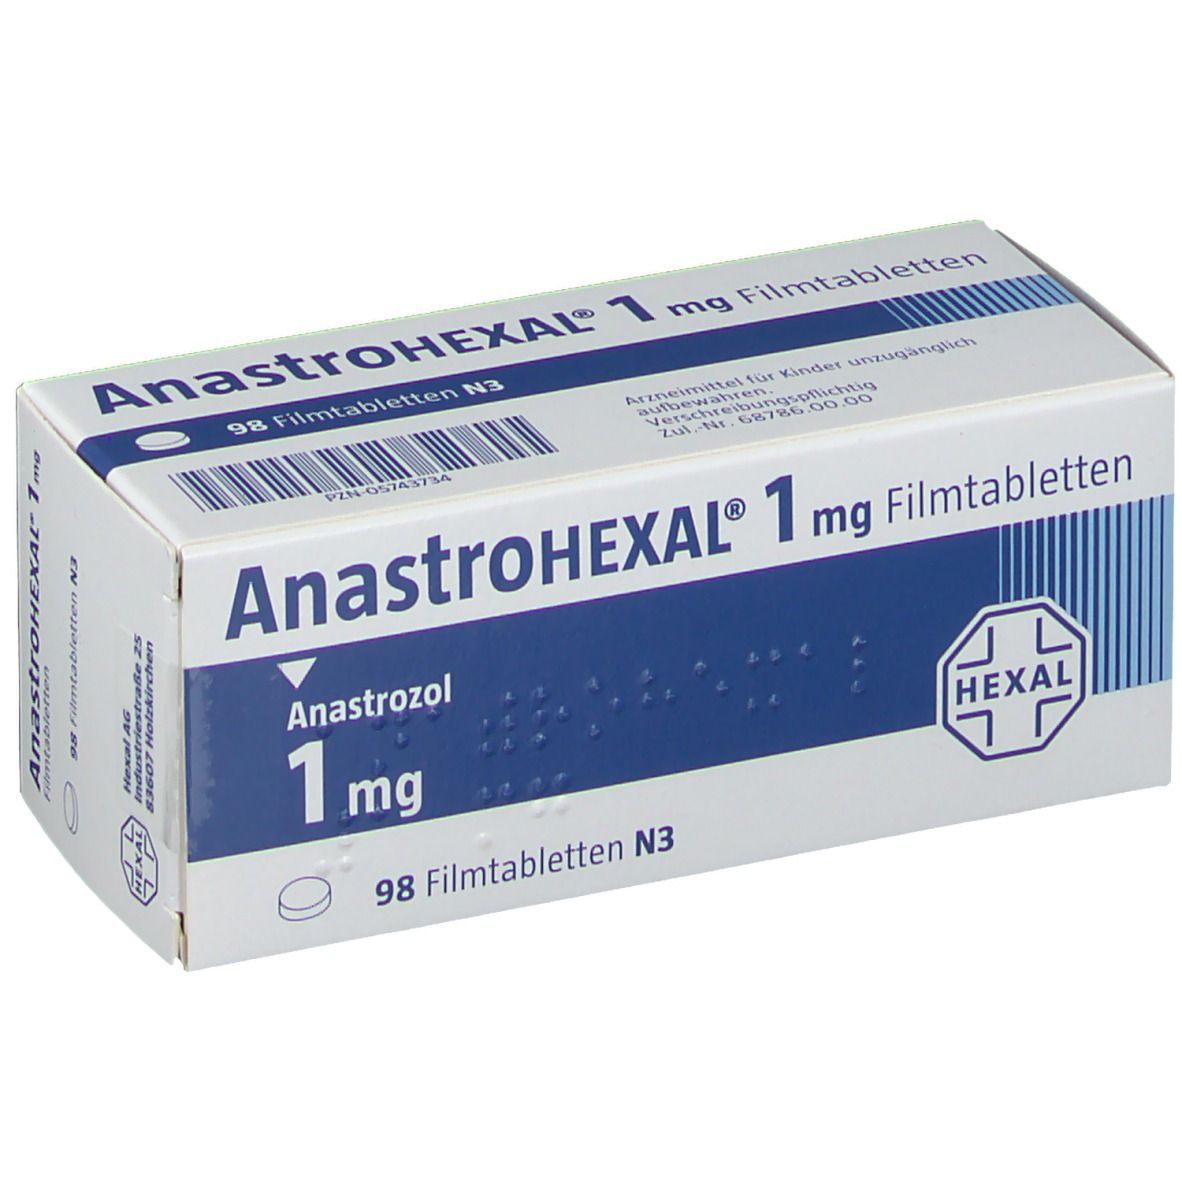 AnastroHEXAL® 1 mg